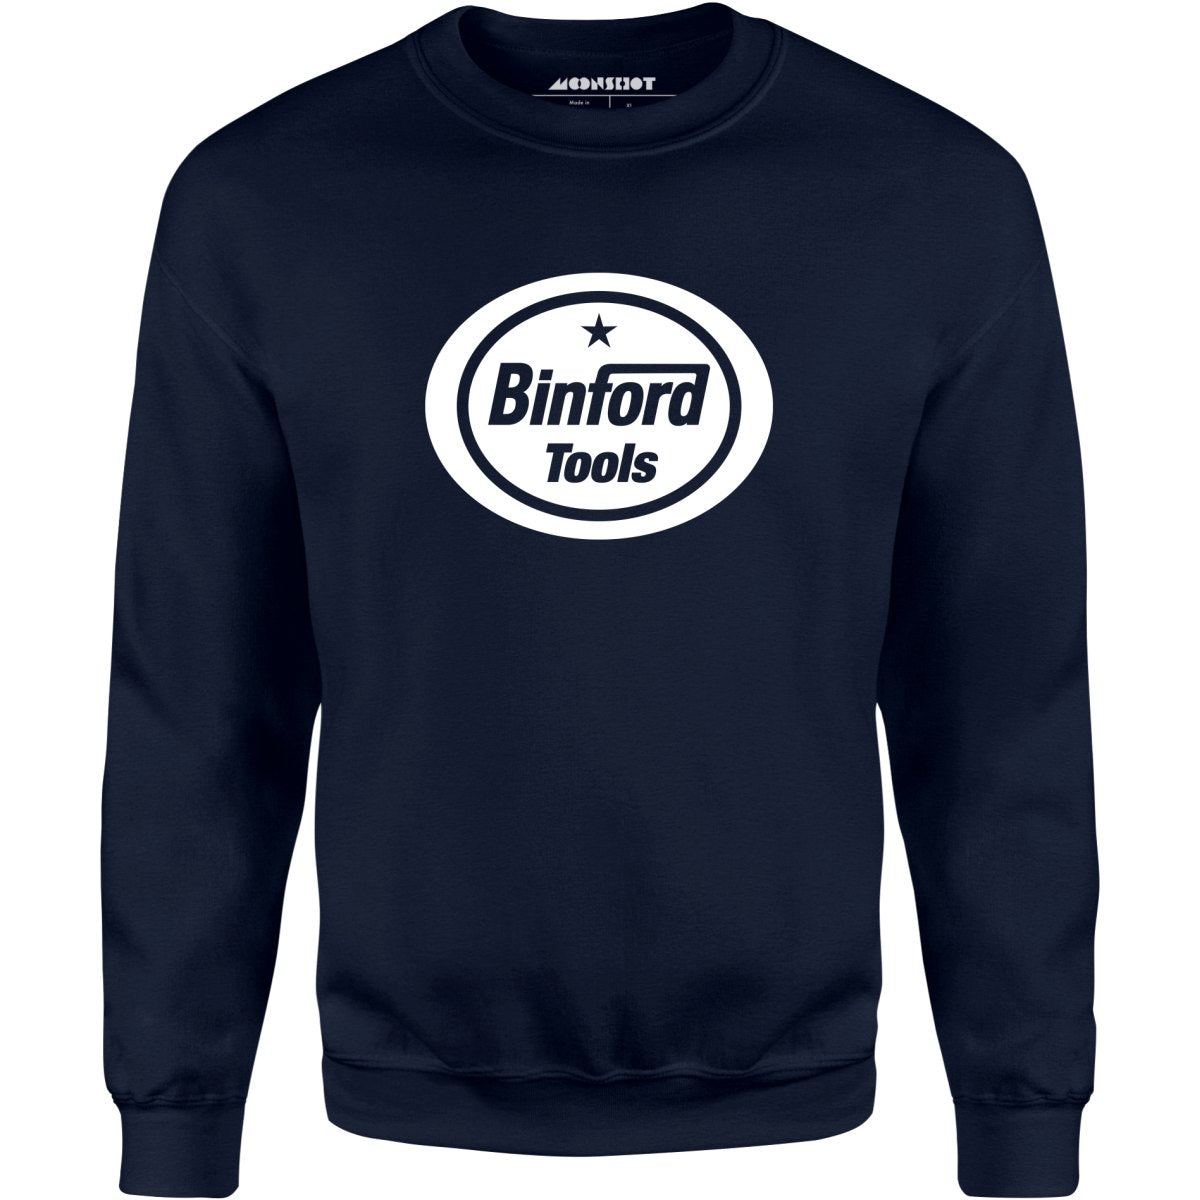 Binford Tools - Unisex Sweatshirt